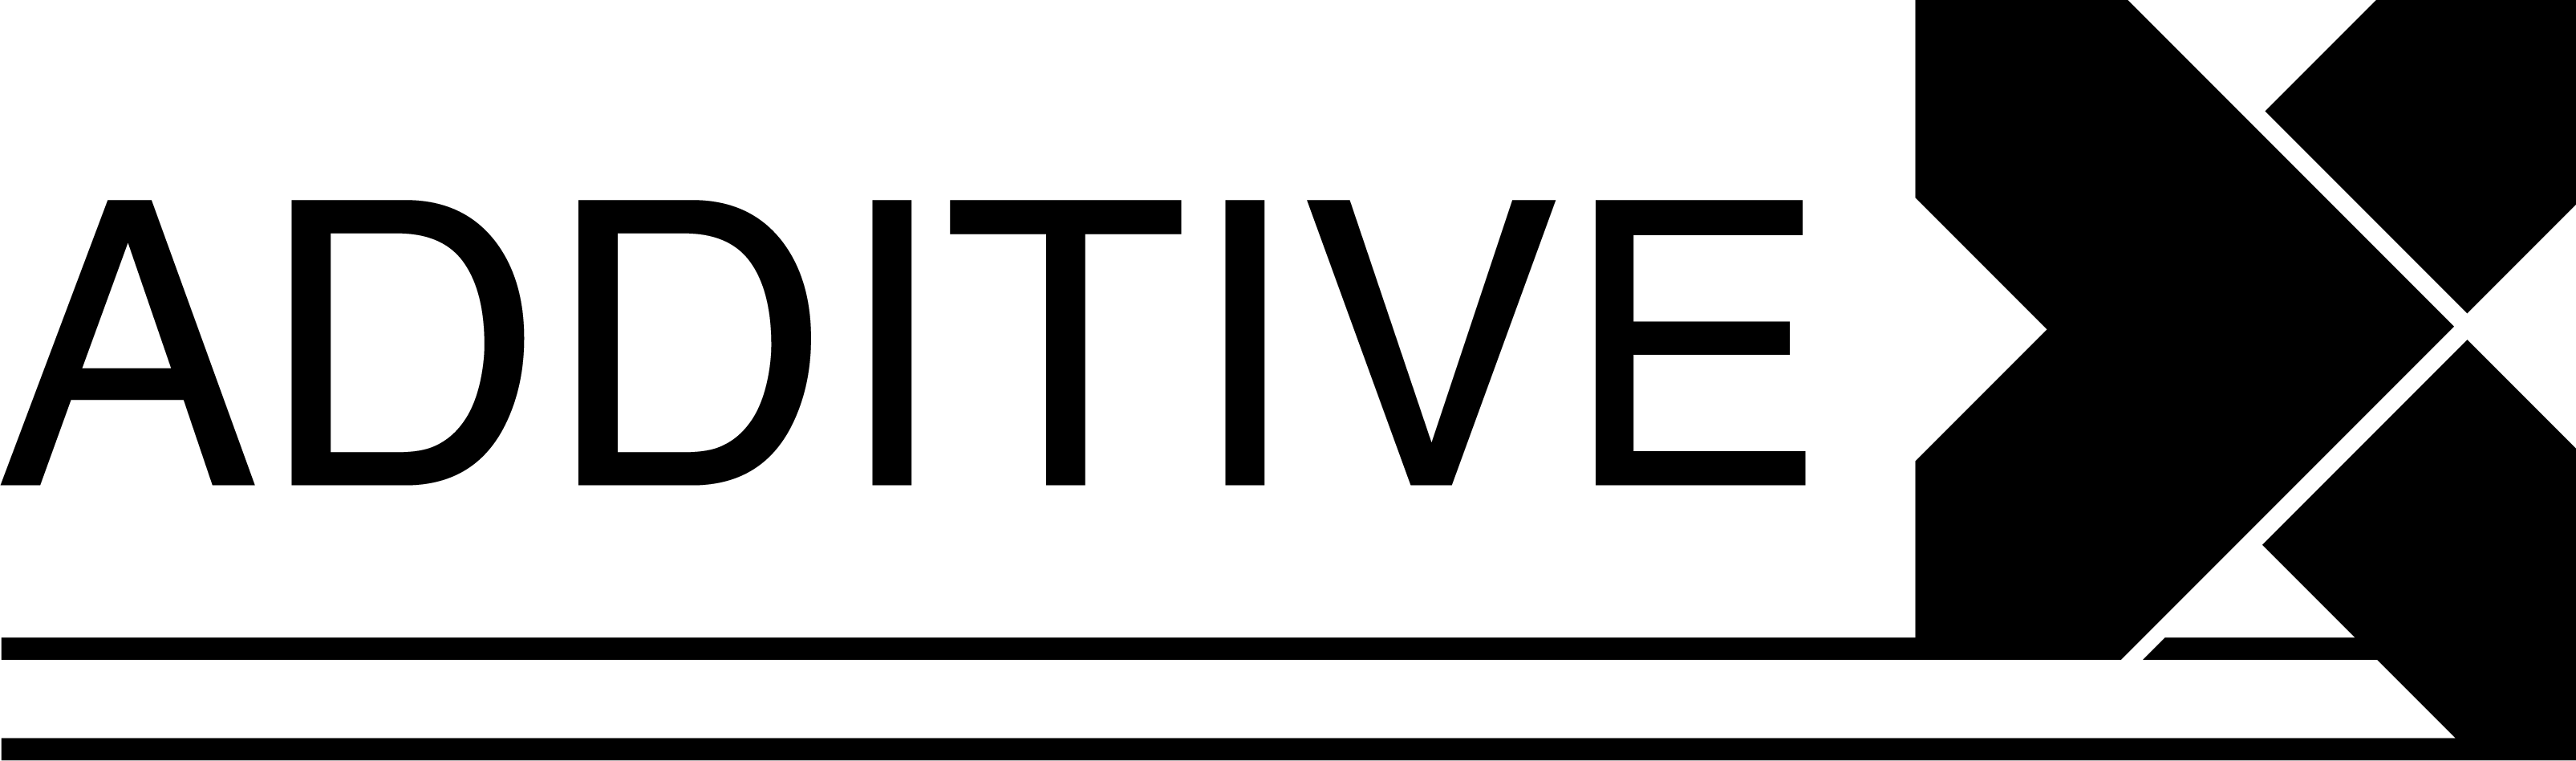 ADDITIVE X Logo